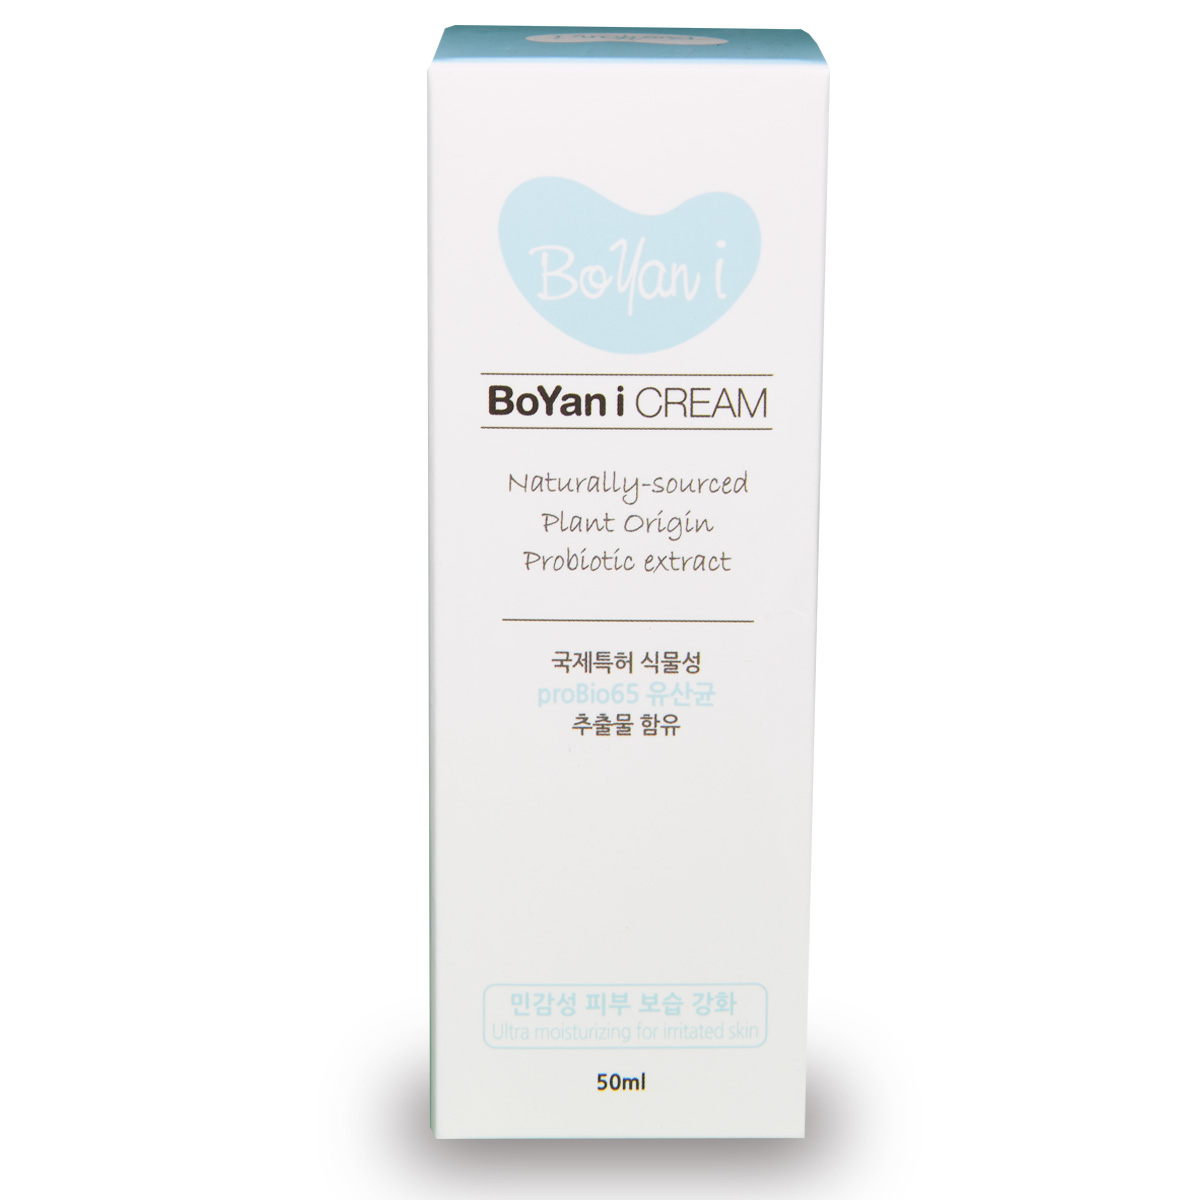 boyan-i cream 2